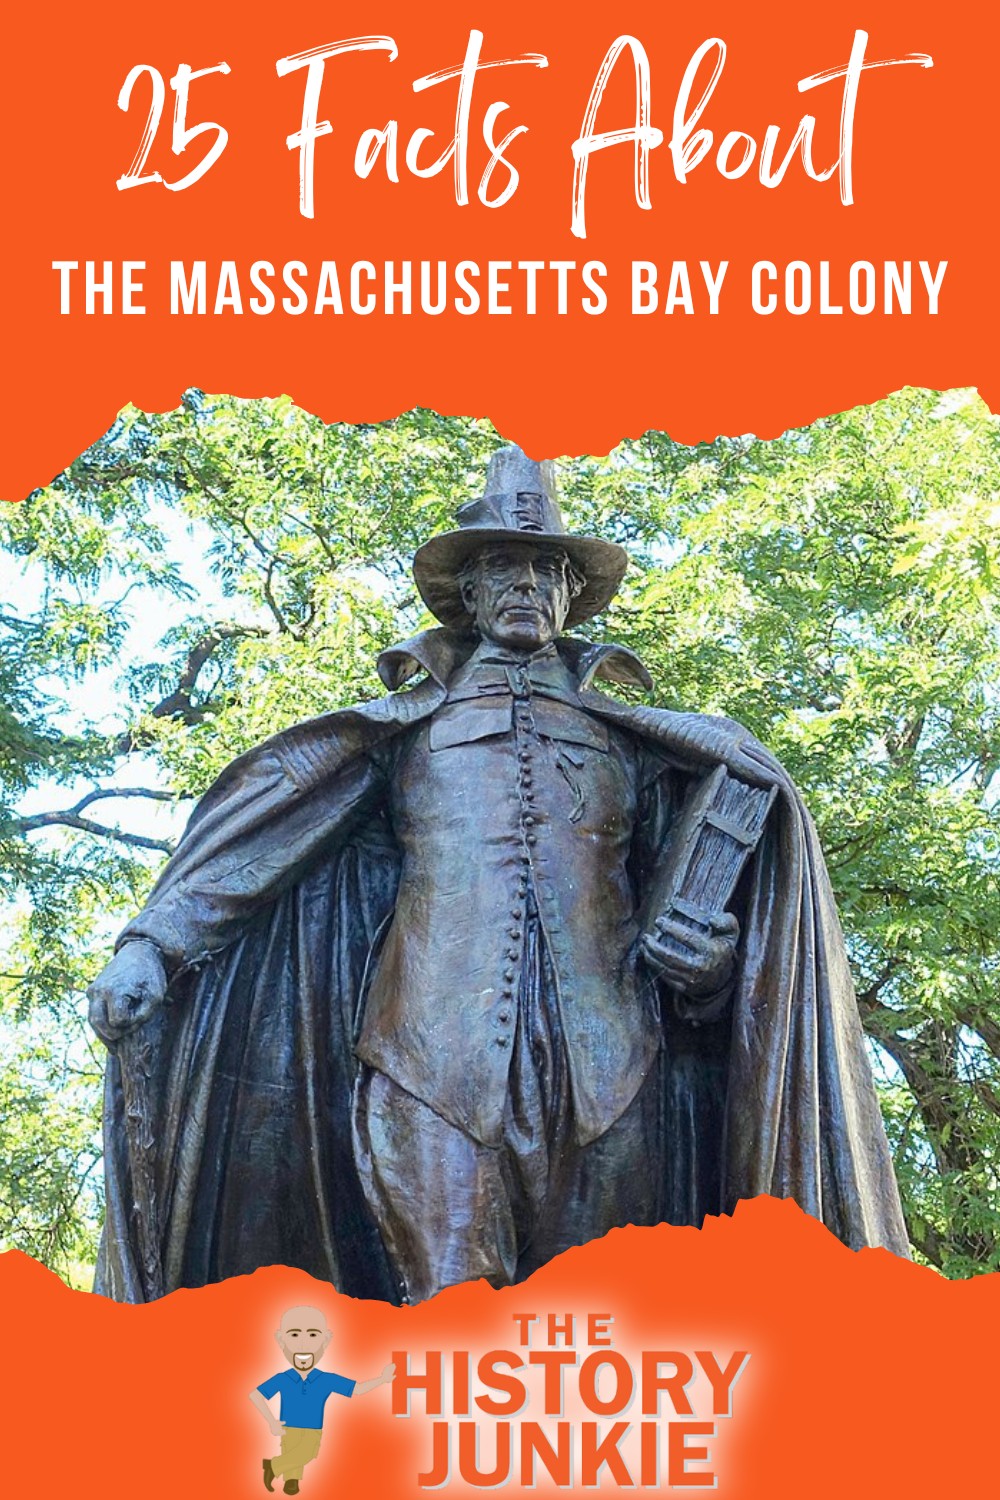 Massachusetts Bay Colony Facts